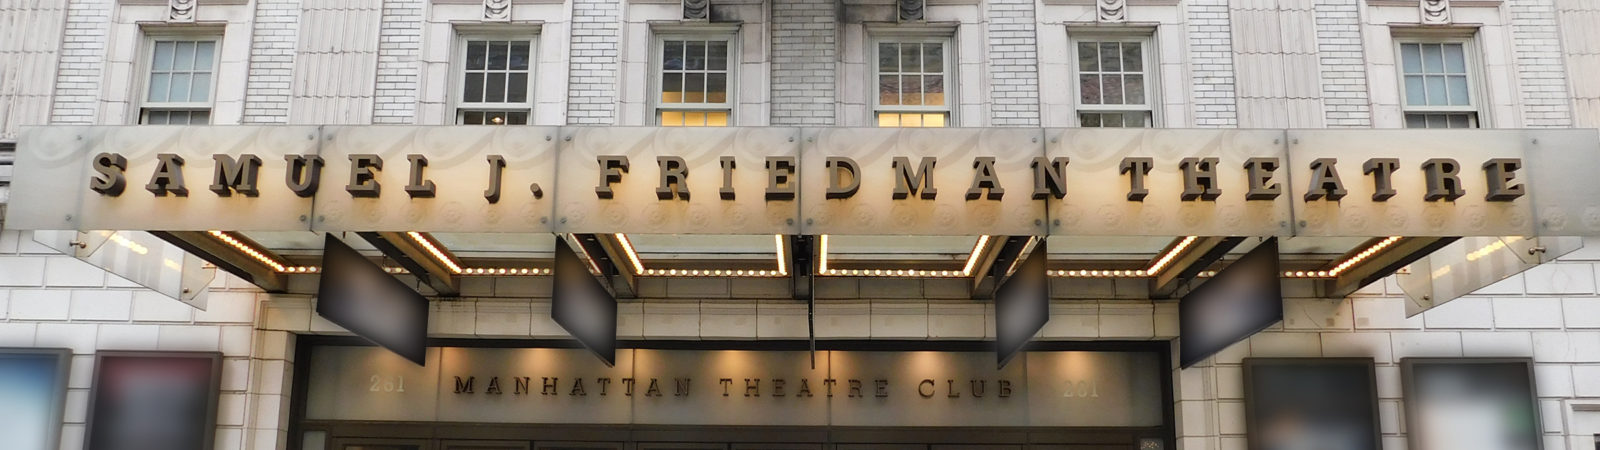 Samuel J. Friedman Theatre